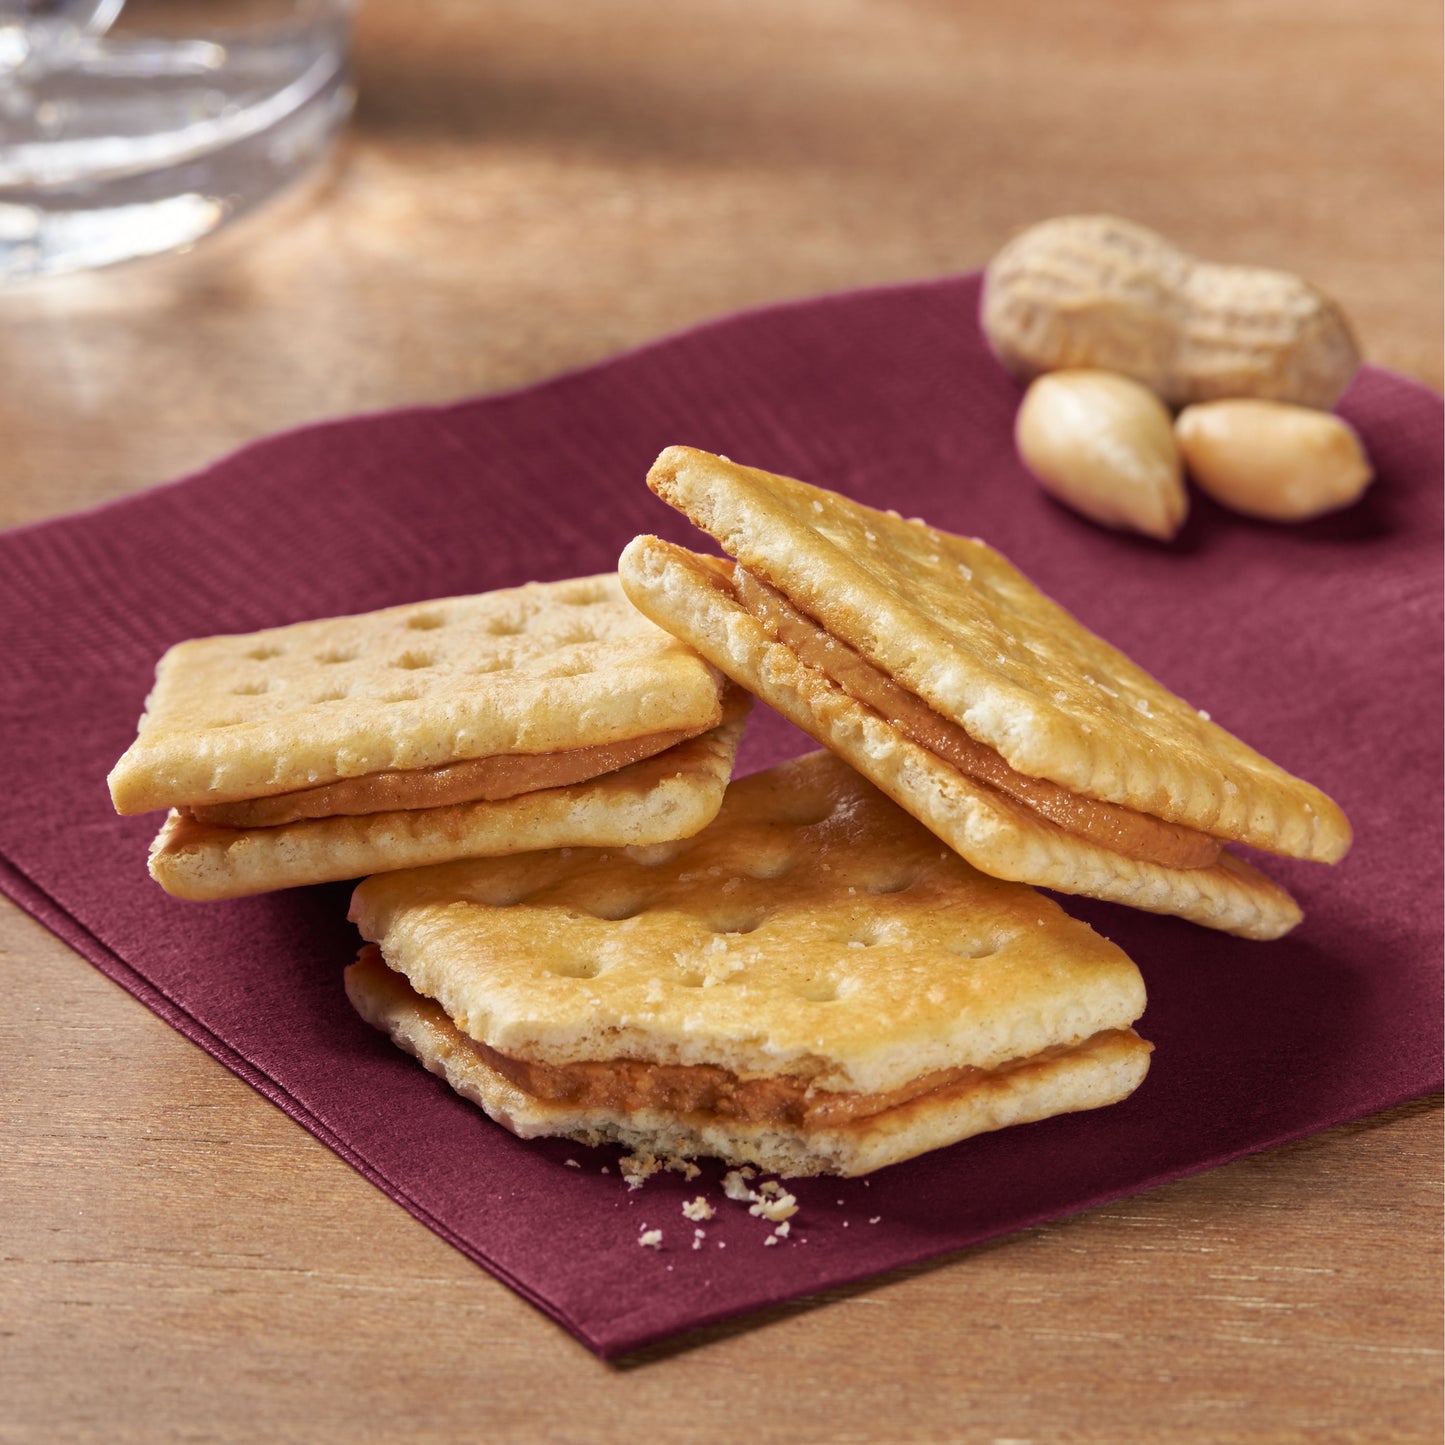 Keebler Toast & Peanut Butter Crackers 1.8oz - 12ct